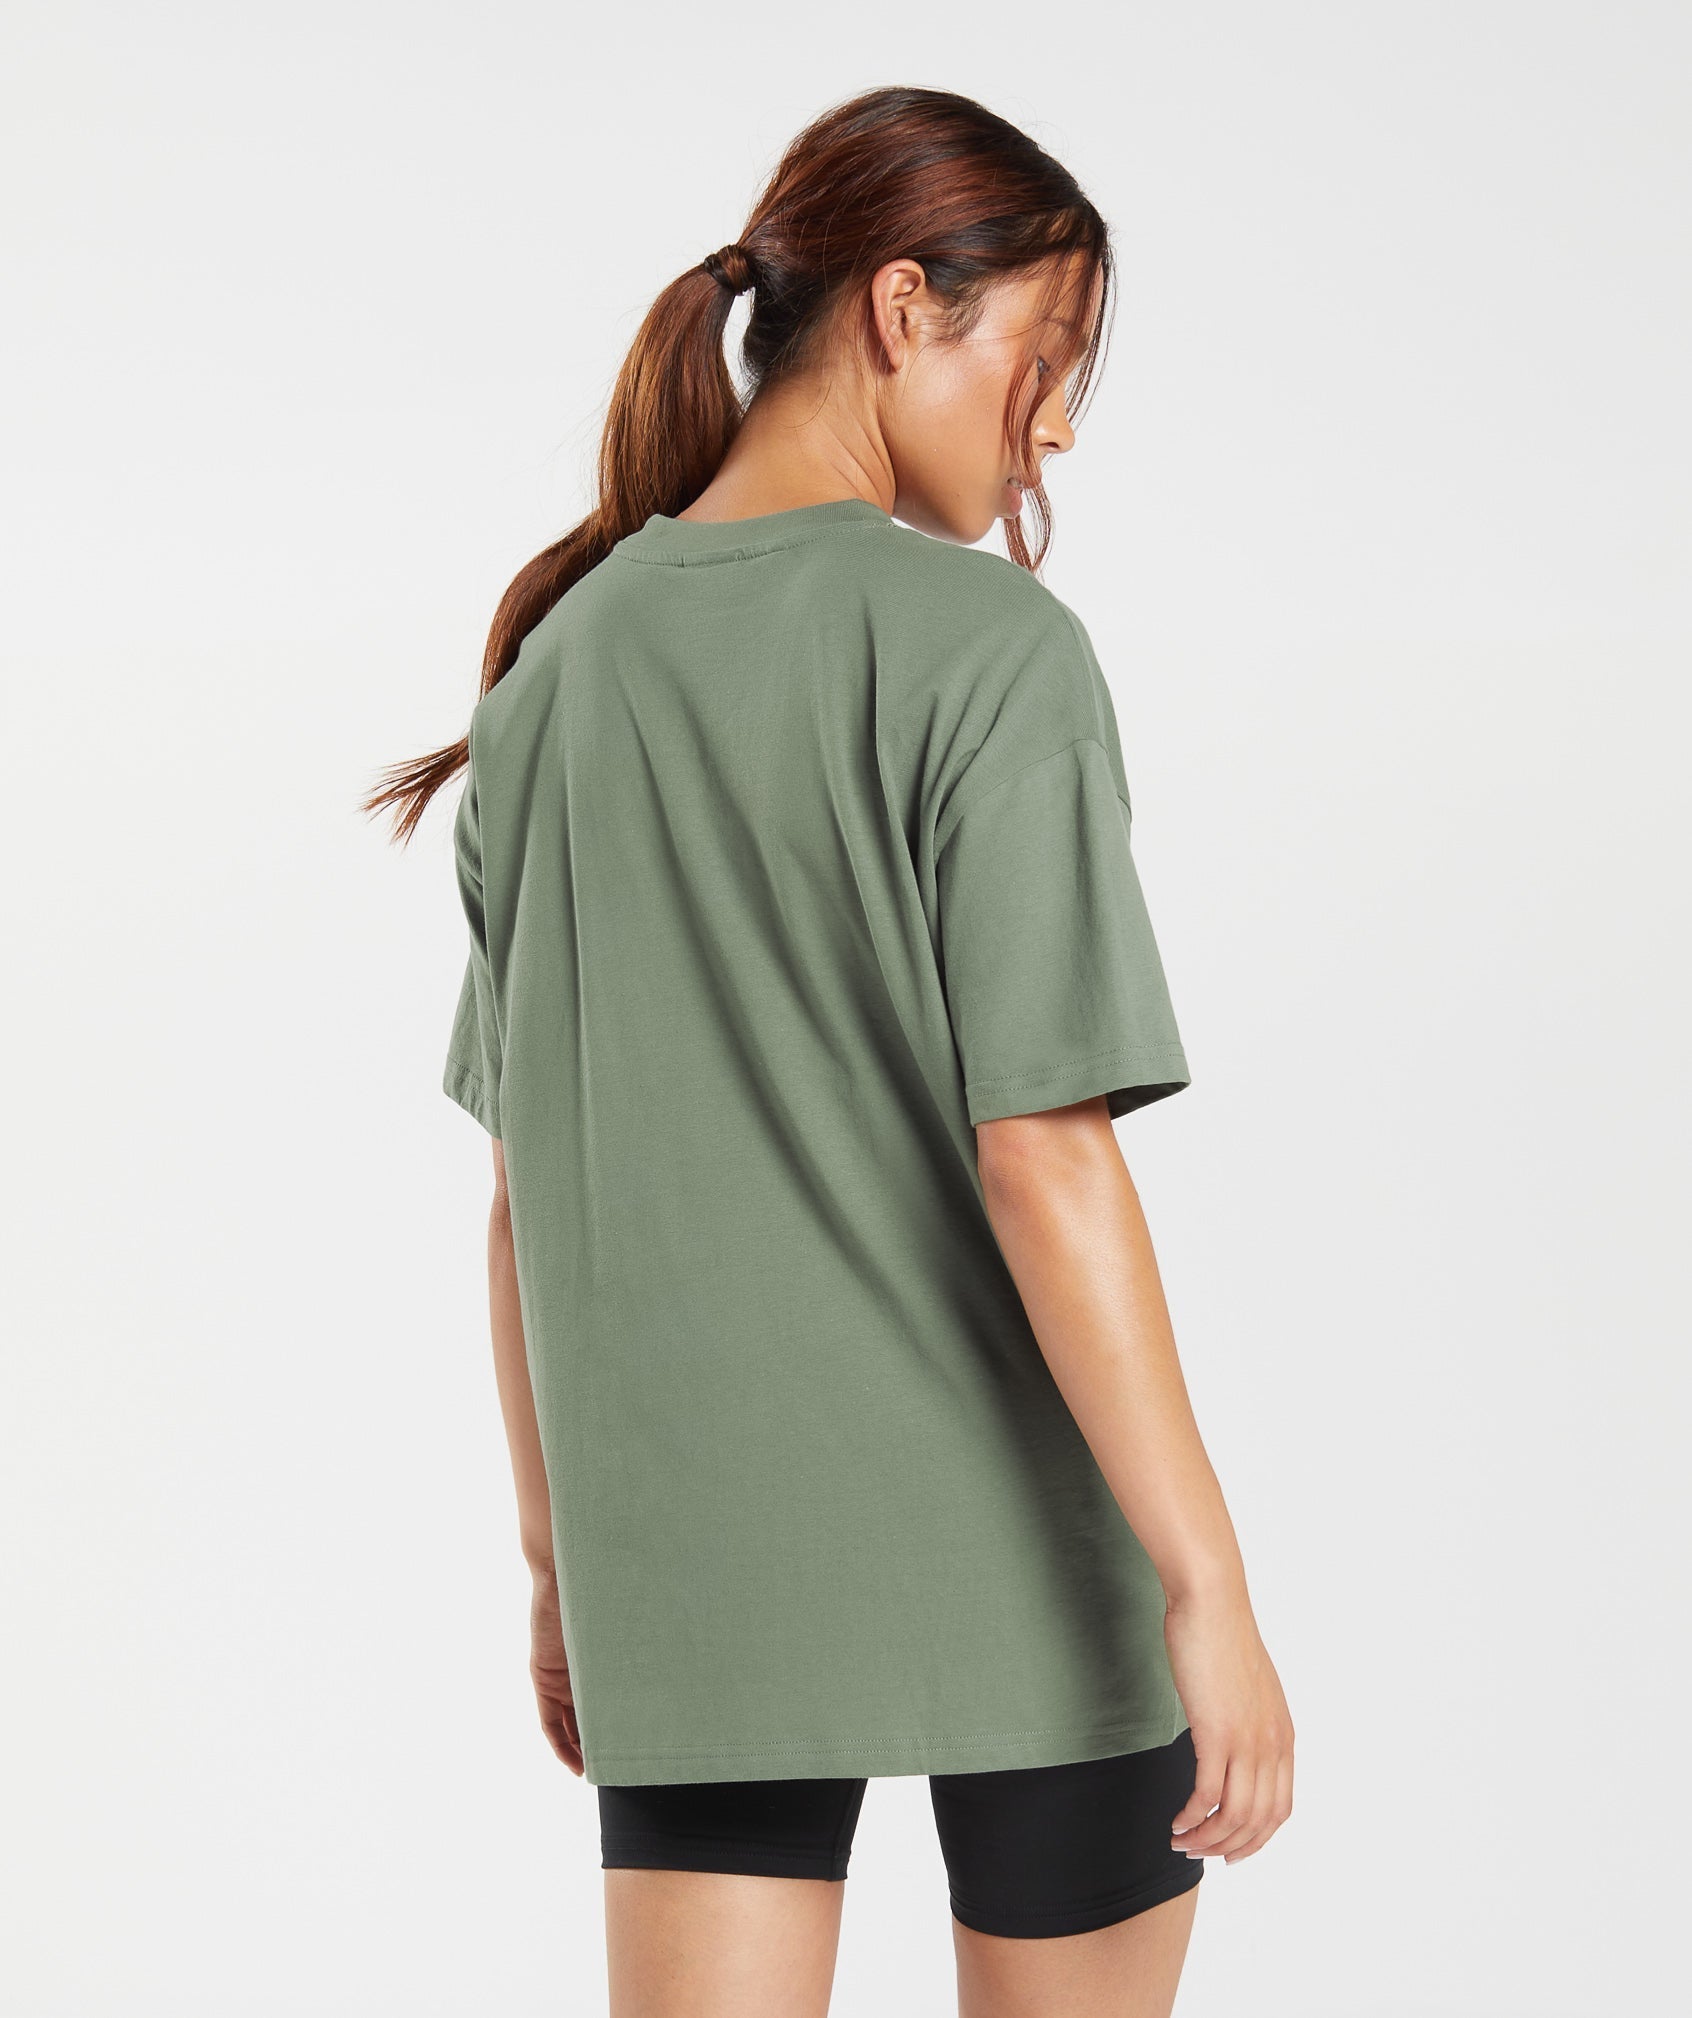 Gymshark Power T-Shirt - Dusk Green